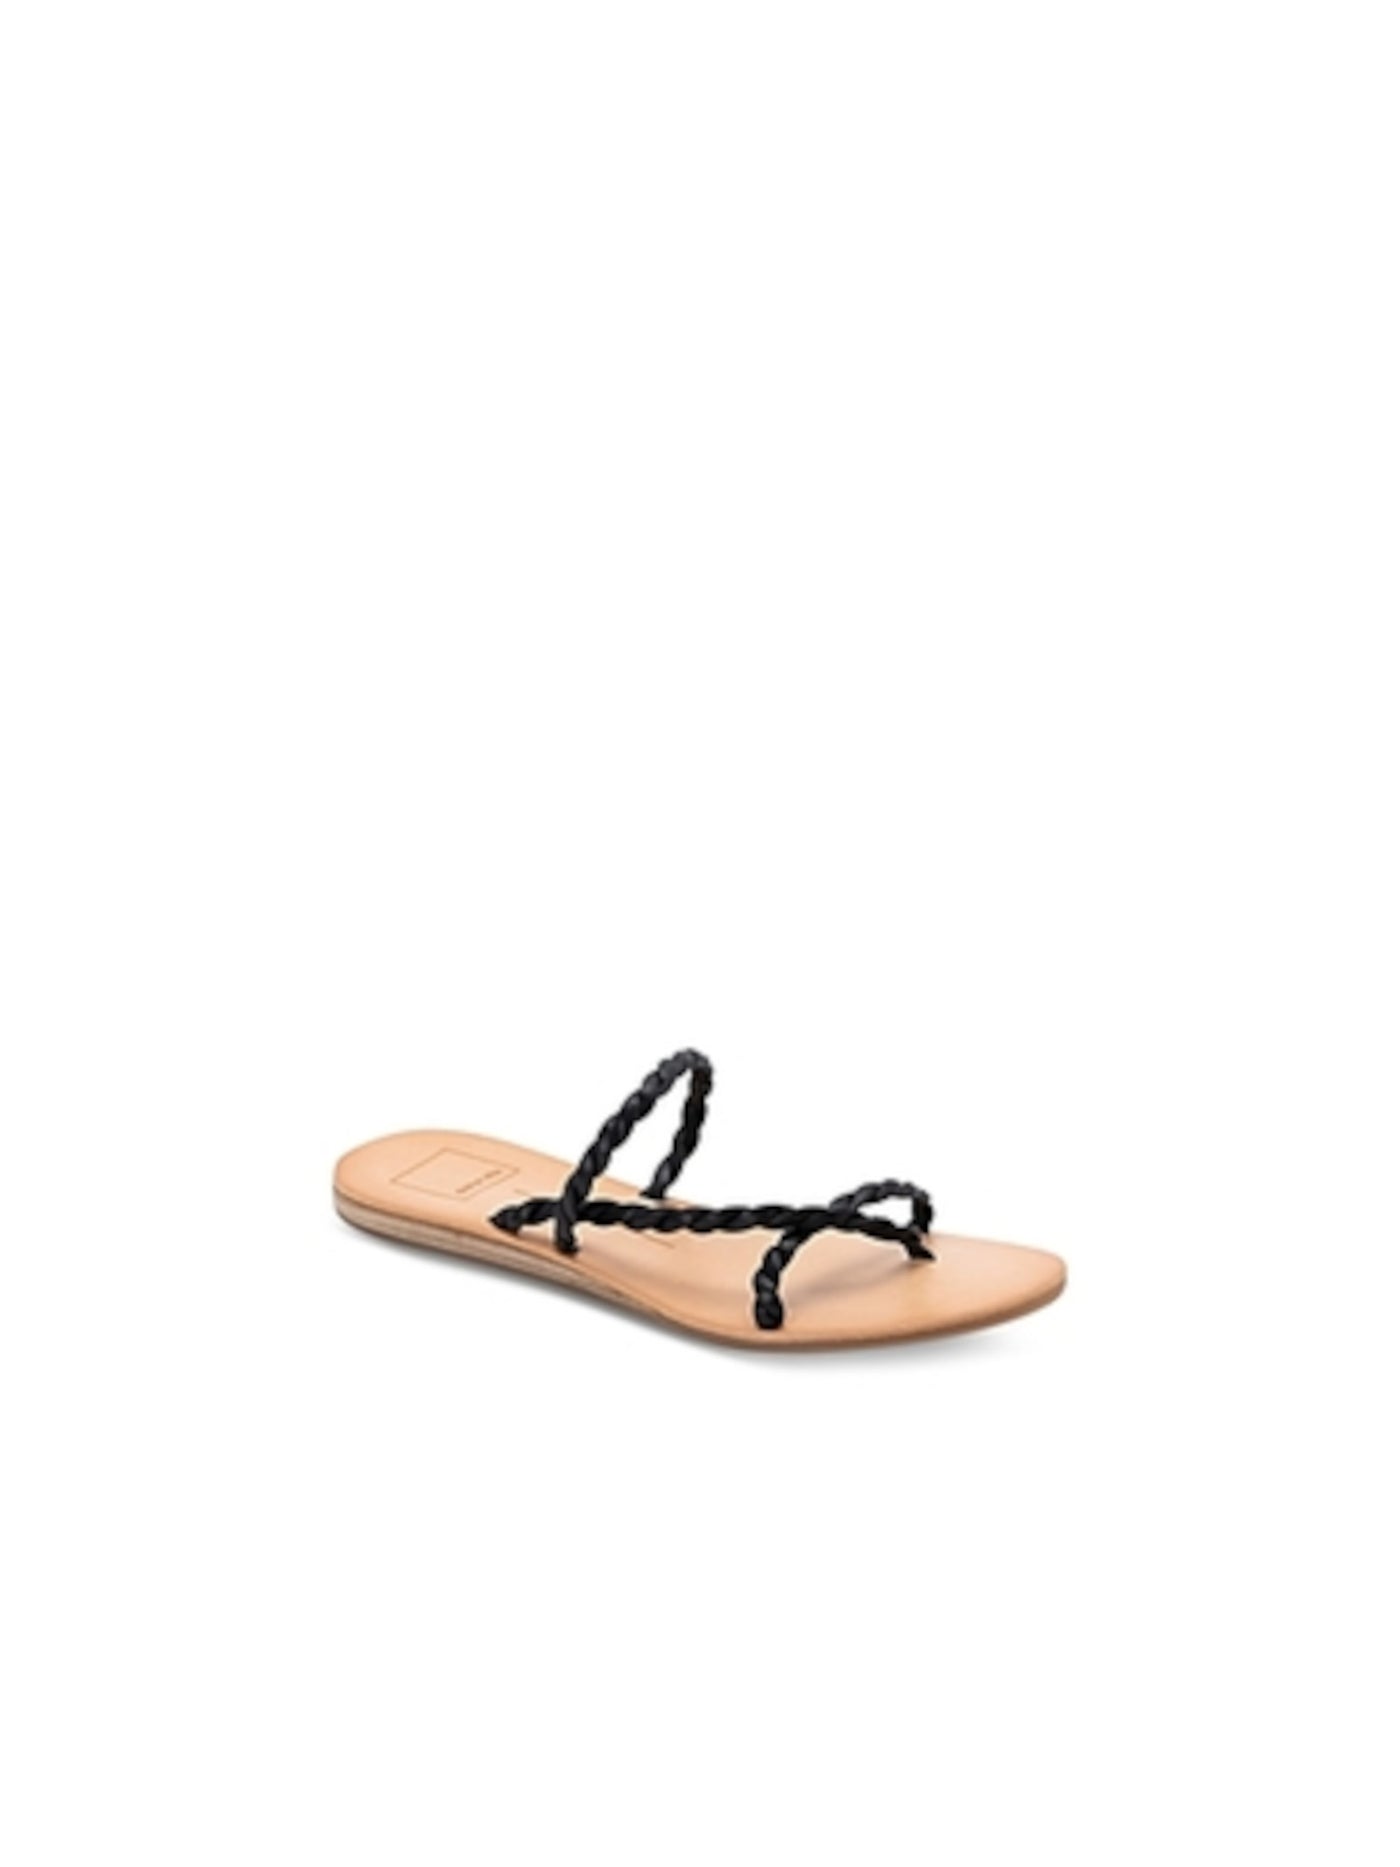 DOLCE VITA Womens Black Braided Dexla Open Toe Sculpted Heel Slip On Thong Sandals 9.5